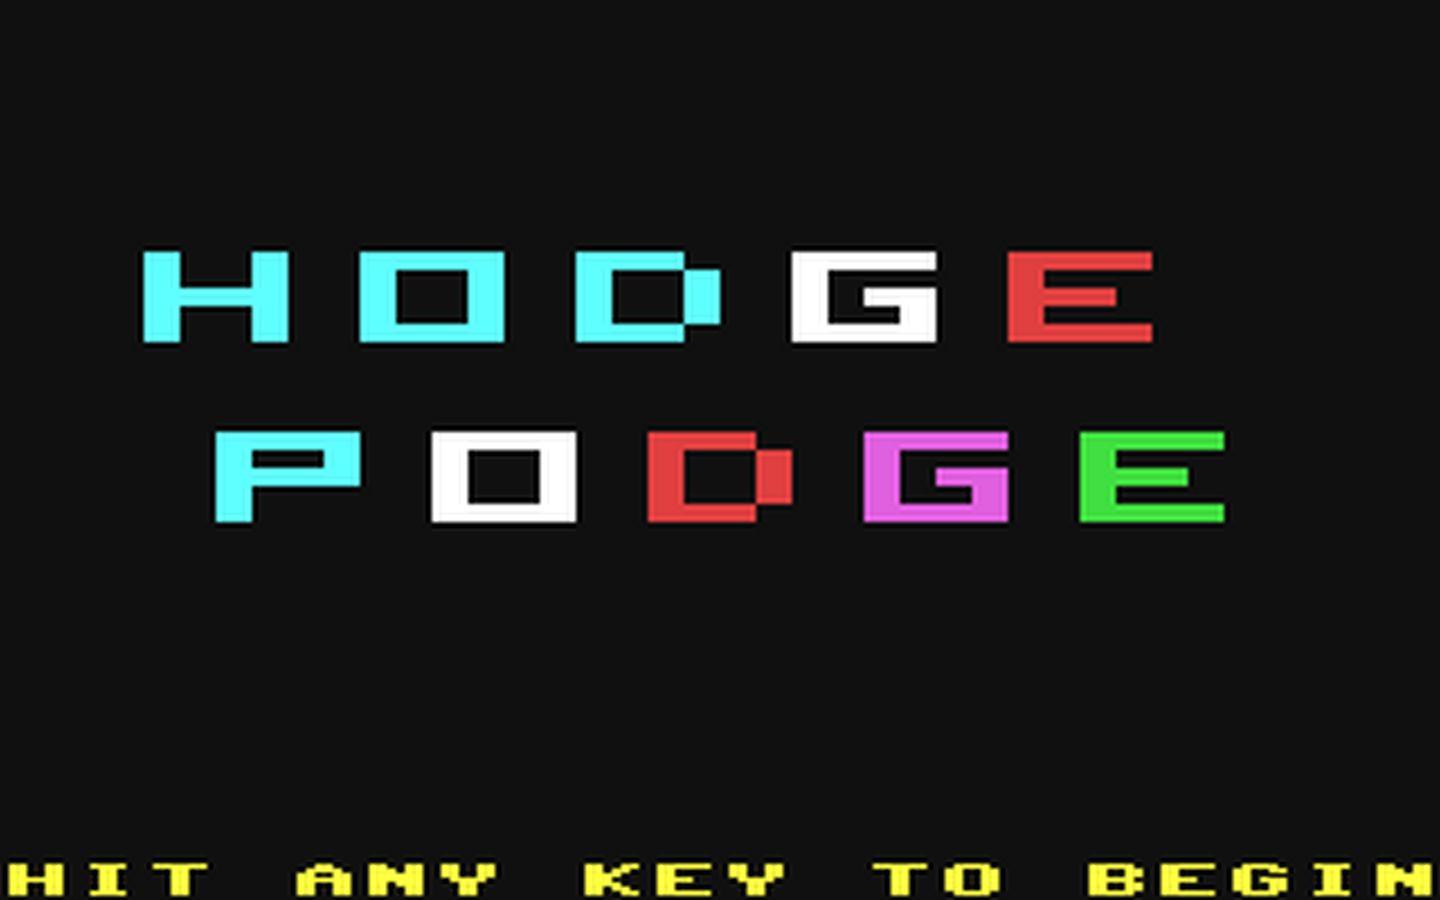 C64 GameBase Hodge_Podge_-_The_Playful_Alphabet Artworx_Software_Company 1984